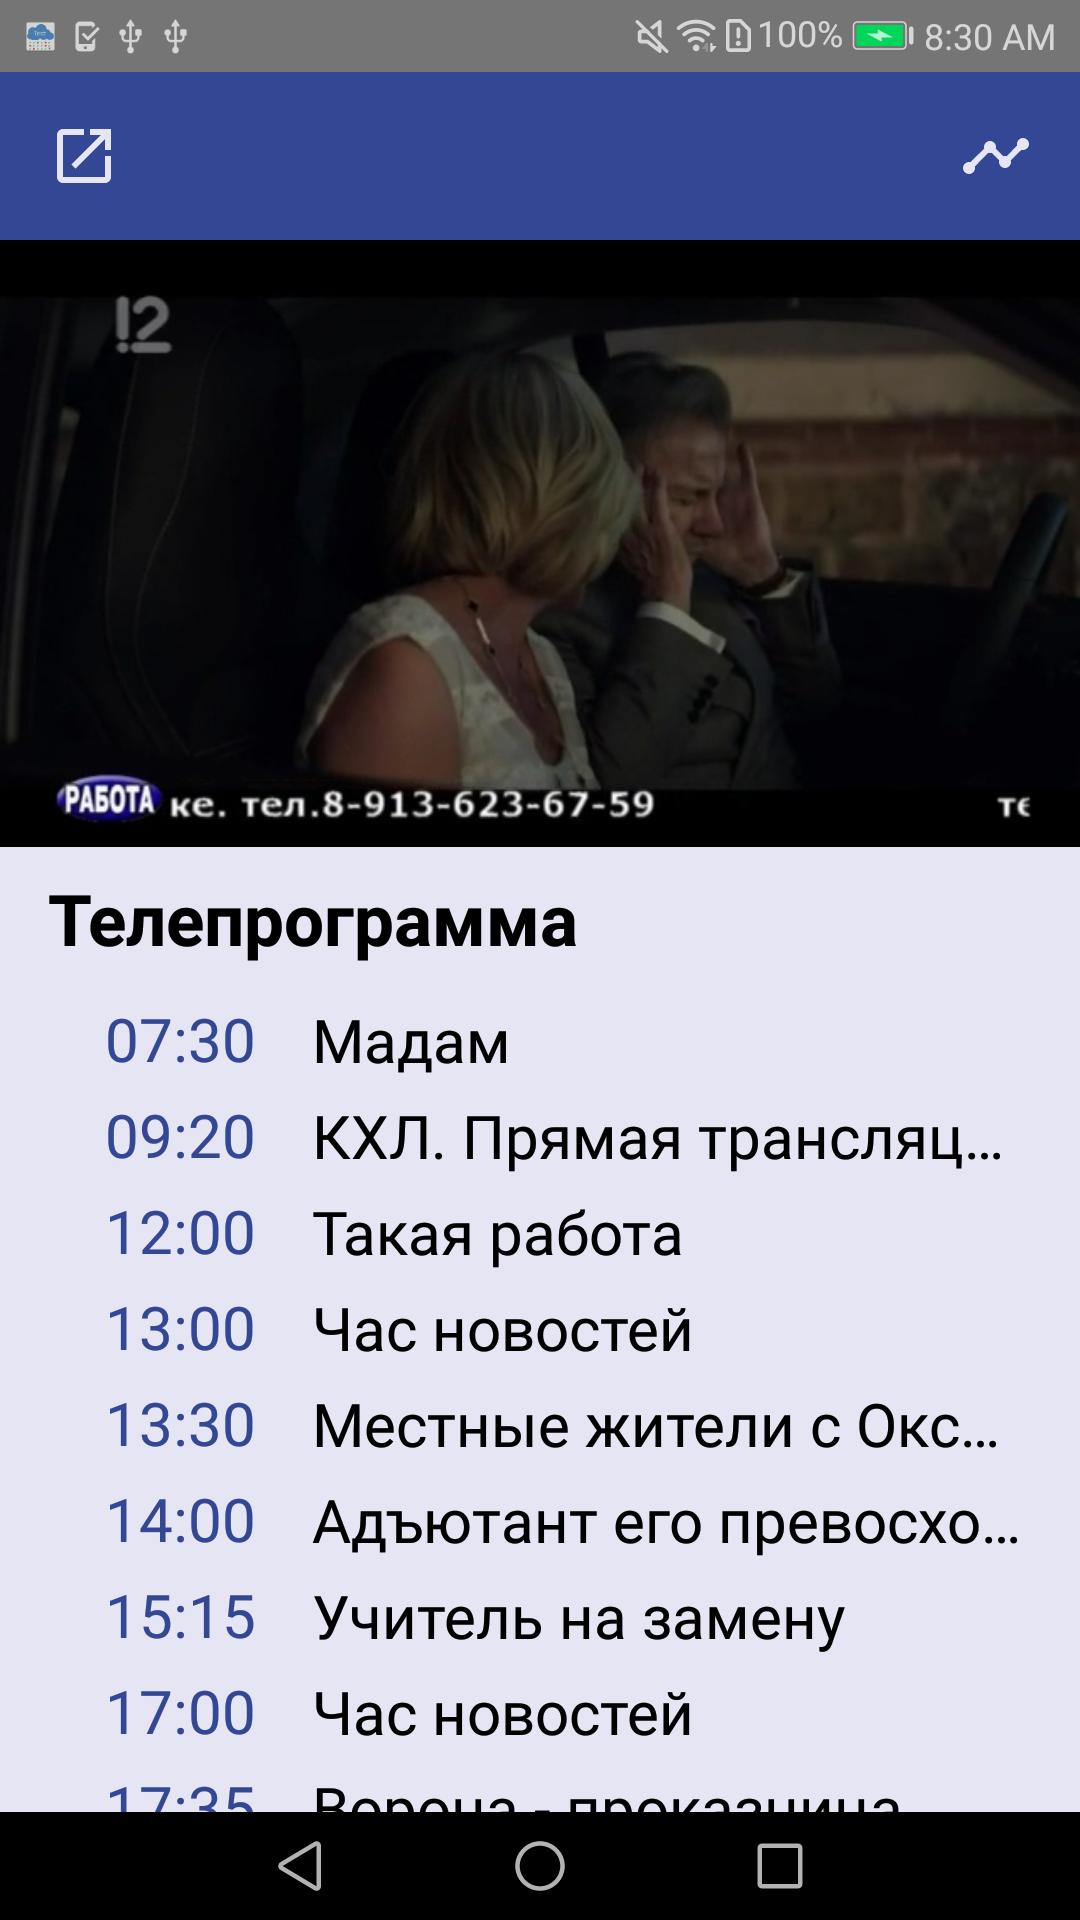 Программа передач на завтра все каналы омск. 12 Канал Омск. Телеканал ОРТРК 12 канал. Программа Омск. Телепередачи Омск.